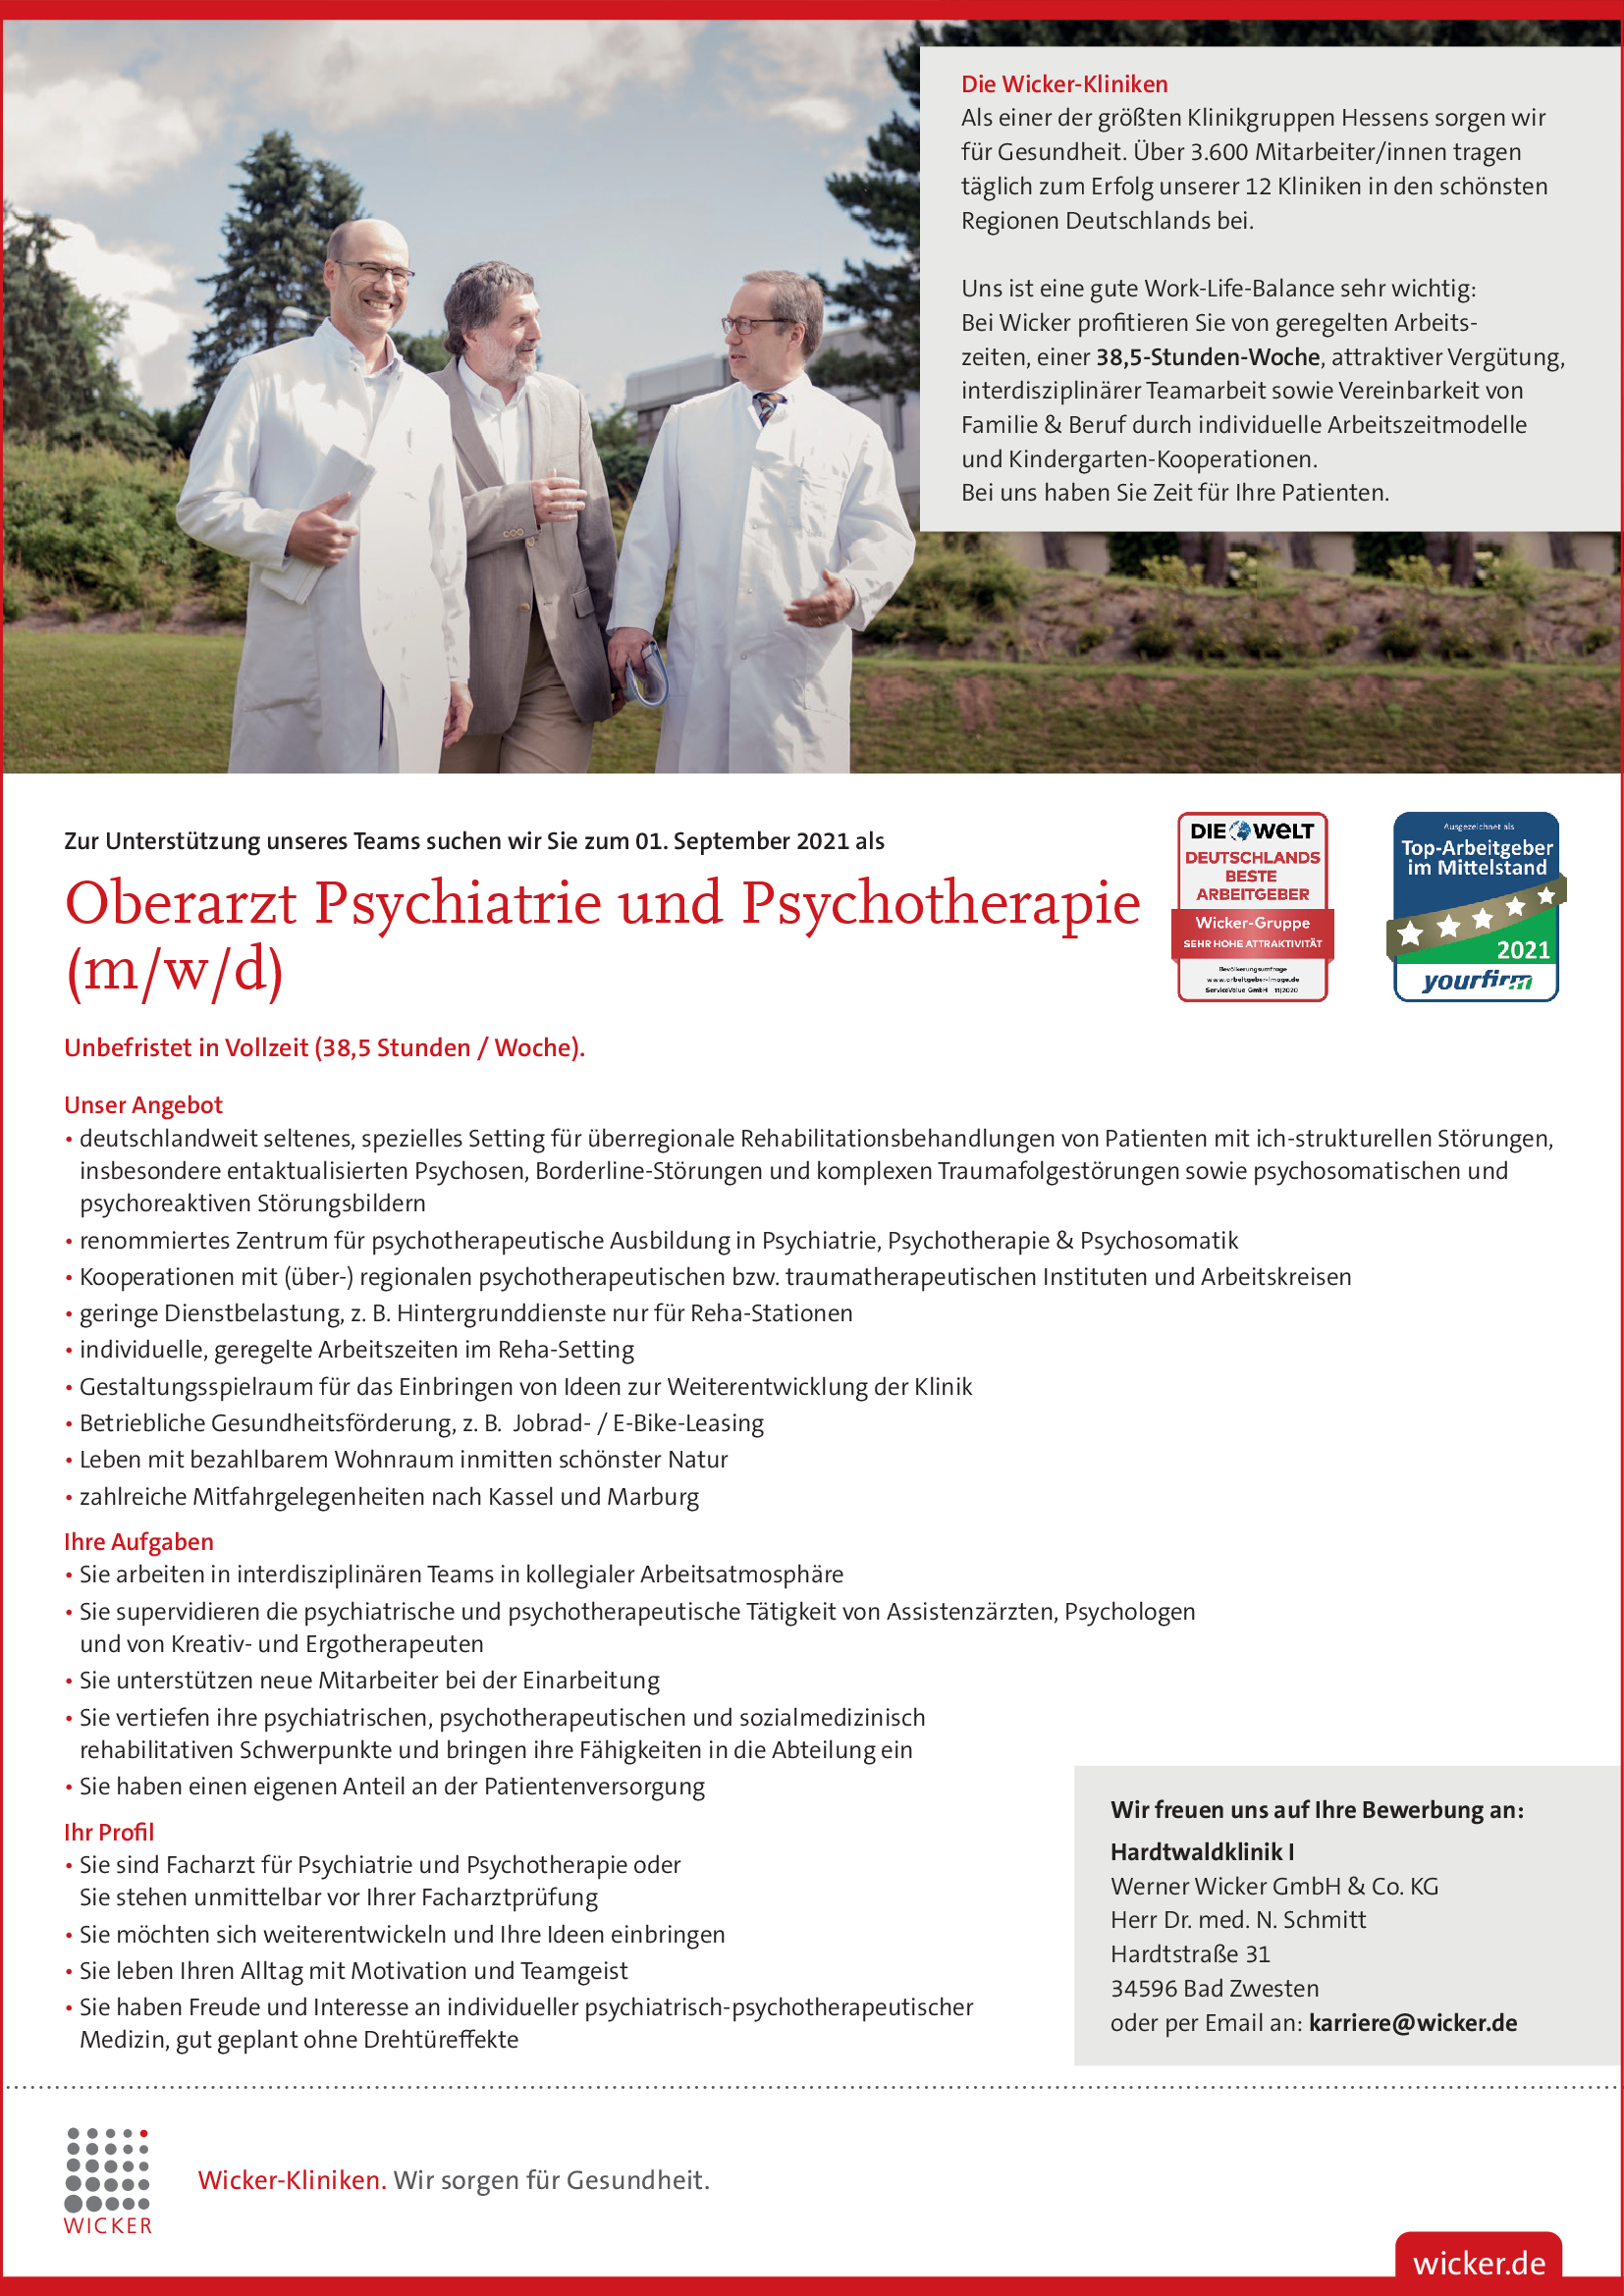 Hardtwaldklinik I: Oberarzt Psychiatrie und Psychotherapie (m/w/d) ab 01.09.2021 in Vollzeit